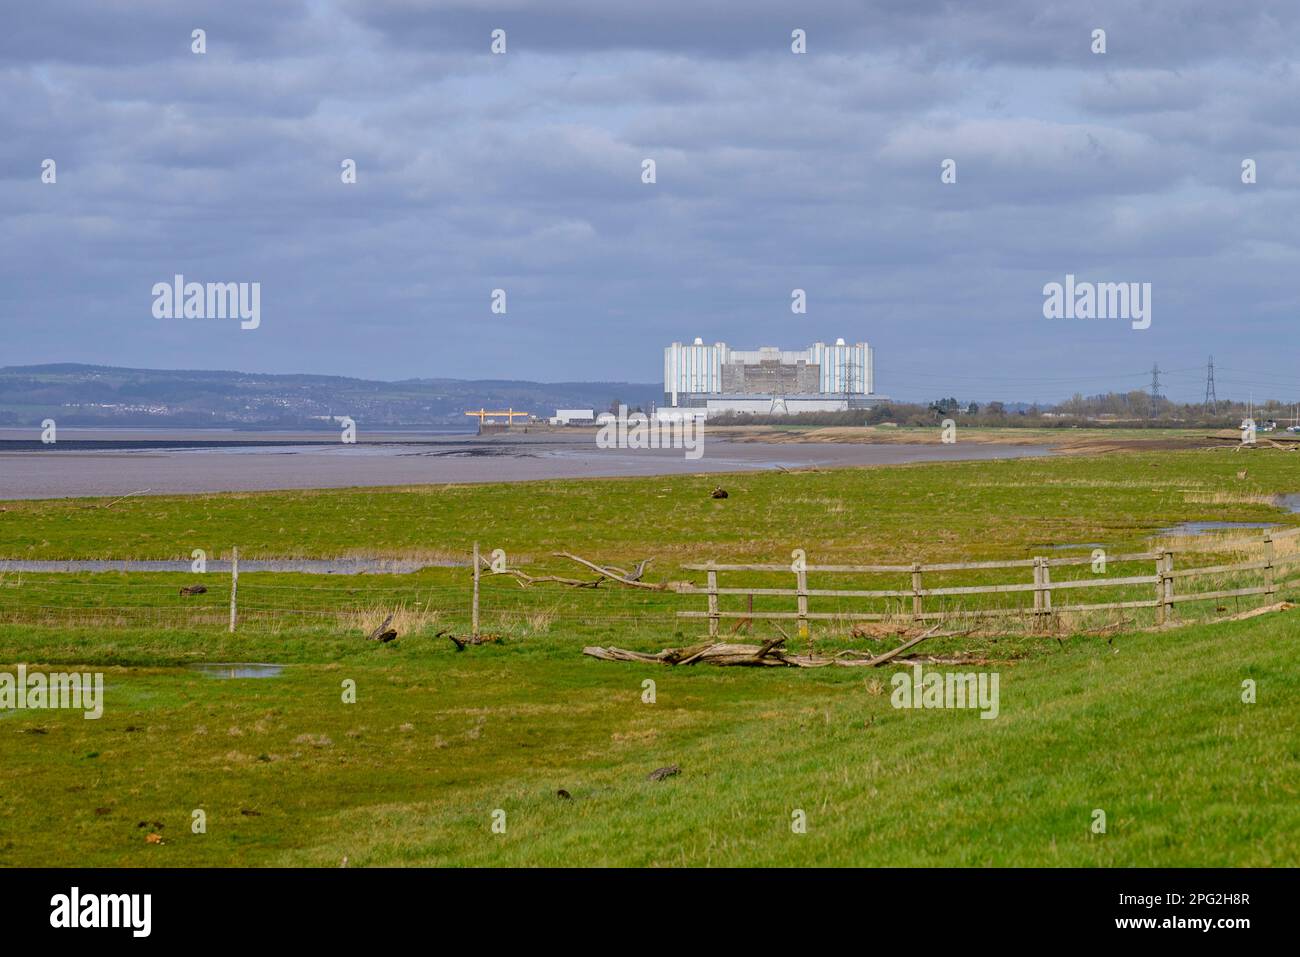 Oldbury nuclear power station on the banks of the River Severn Estuary, Oldbury-on-Severn, South Gloucestershire, England, UK Stock Photo